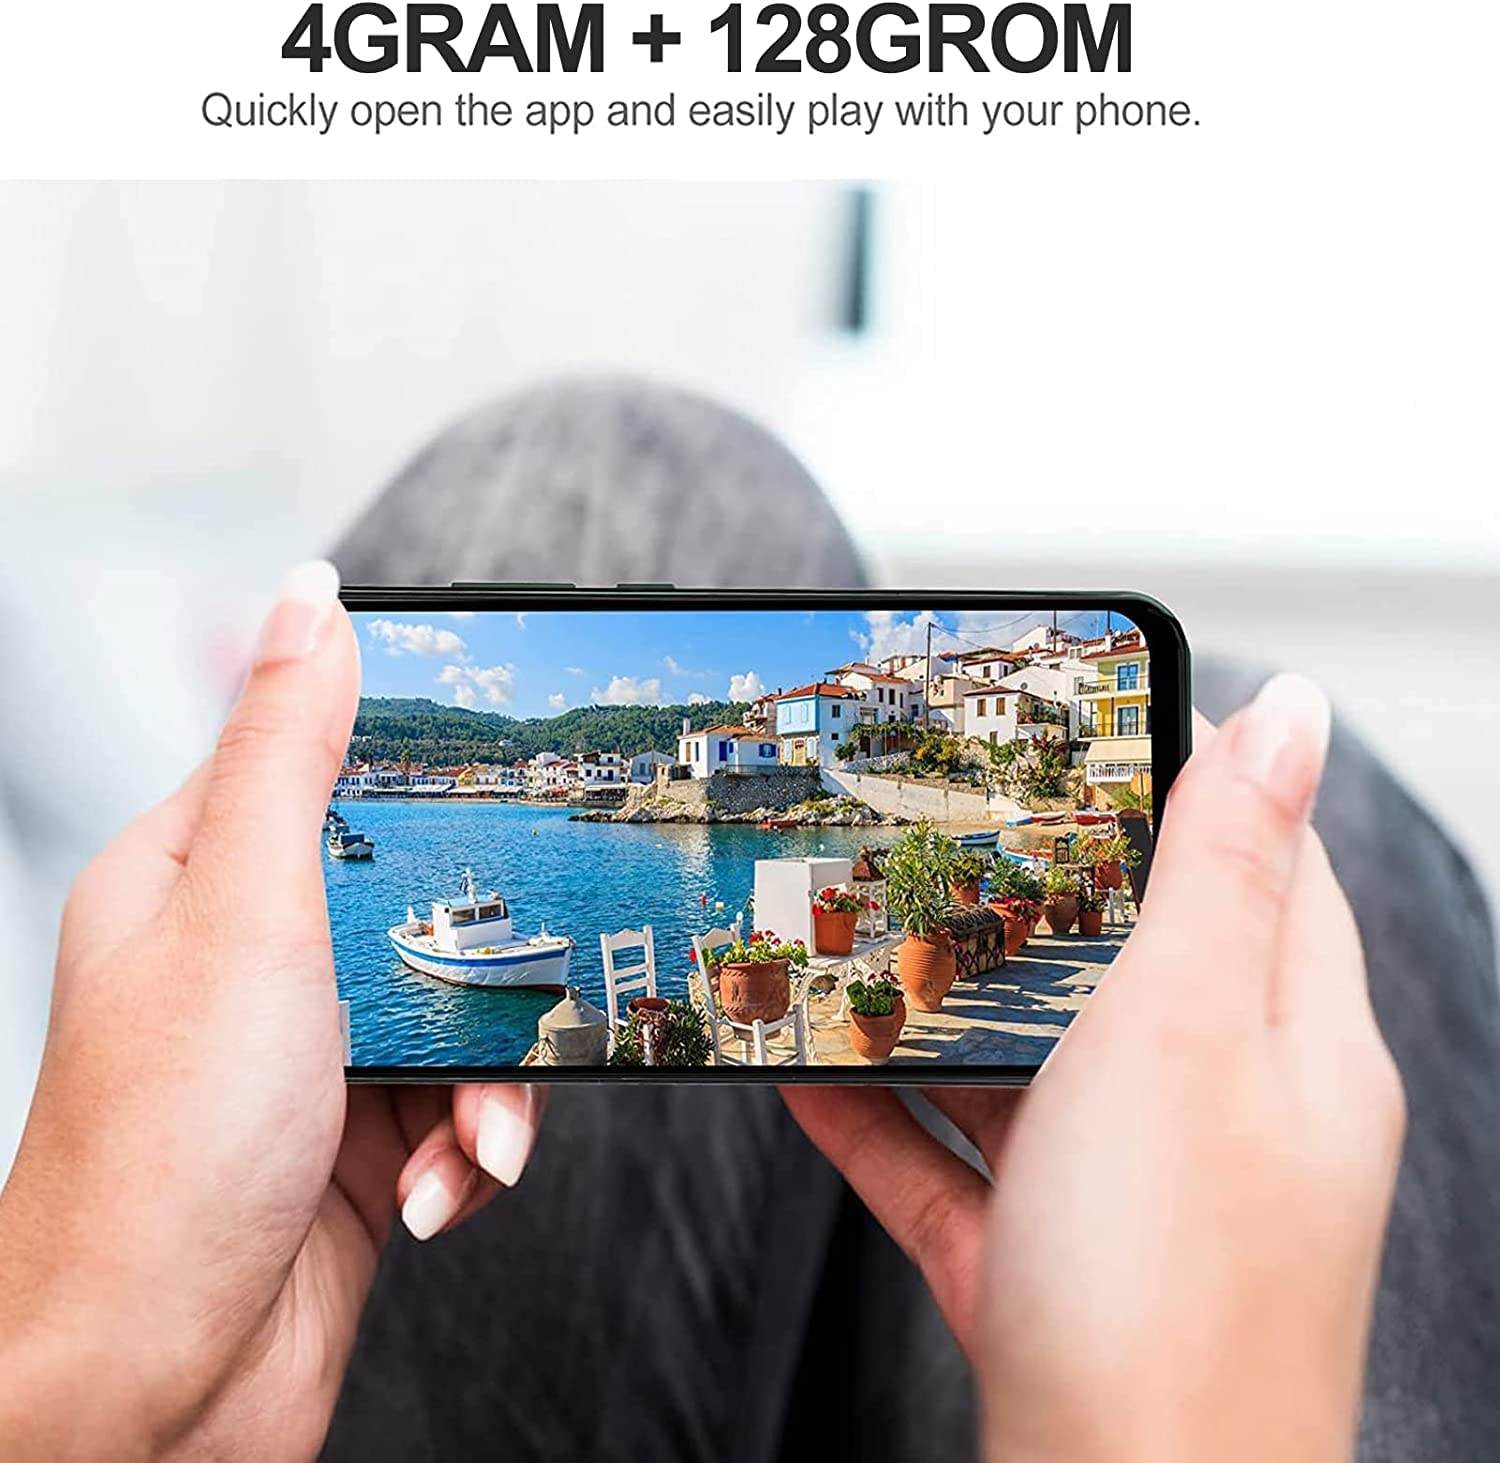 SANSHREUNI G23 + 5G Ultra Cell Phone - Factory Unlocked Android Smartphone, 128GB Storage, 100MP Camera - Long Battery Life - S Pen - US Version - 2023(Rose Gold)